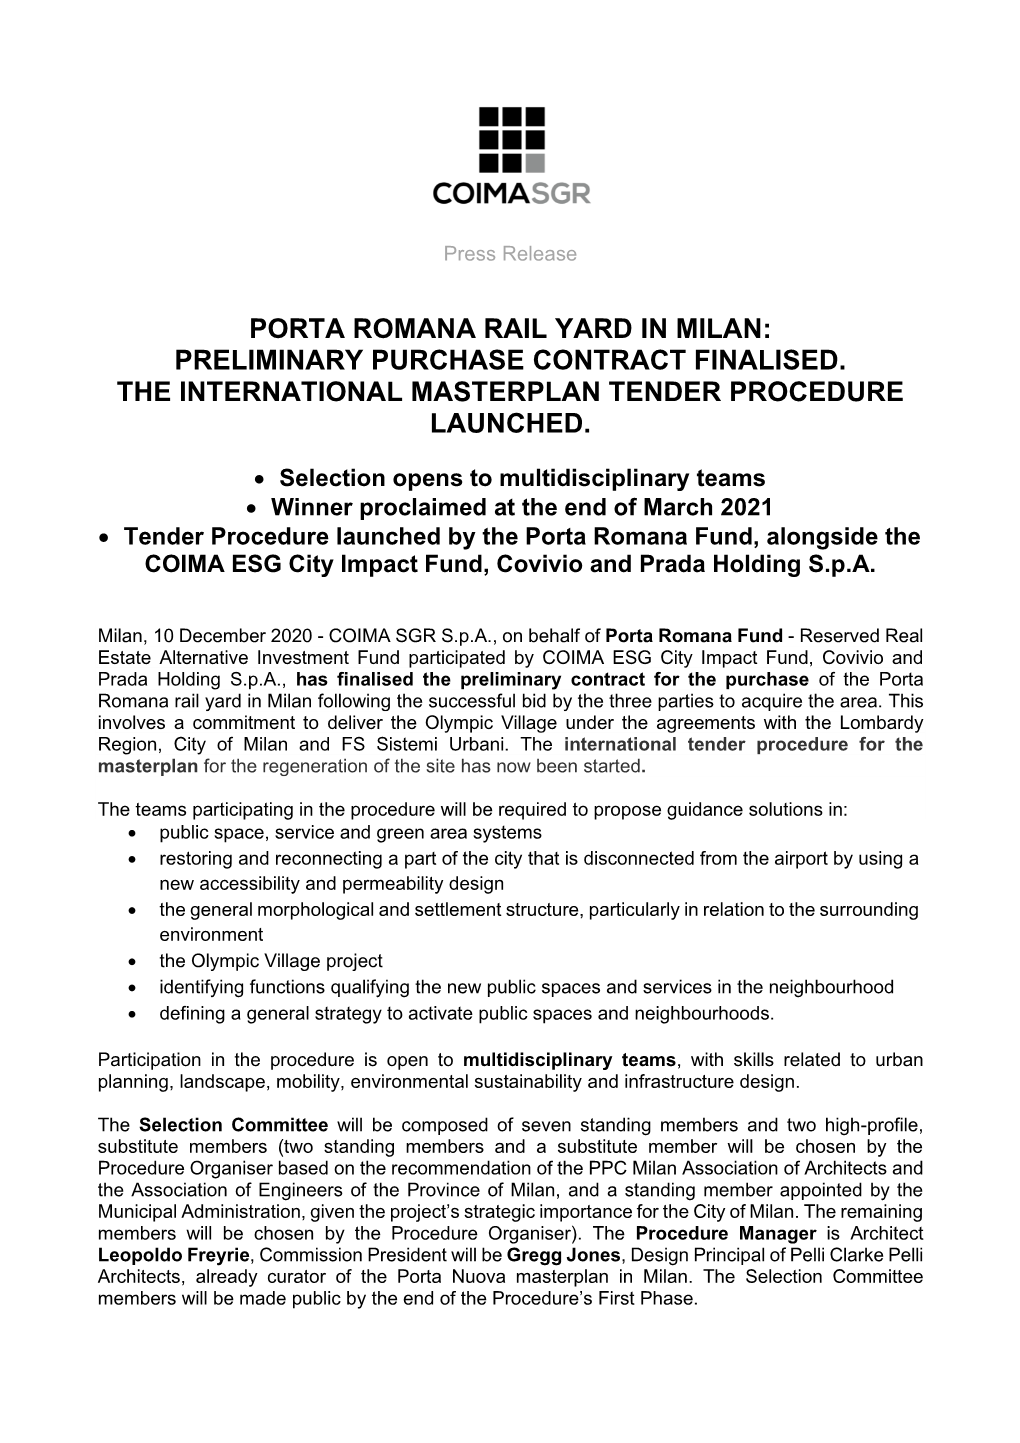 Porta Romana Rail Yard in Milan: Preliminary Purchase Contract Finalised